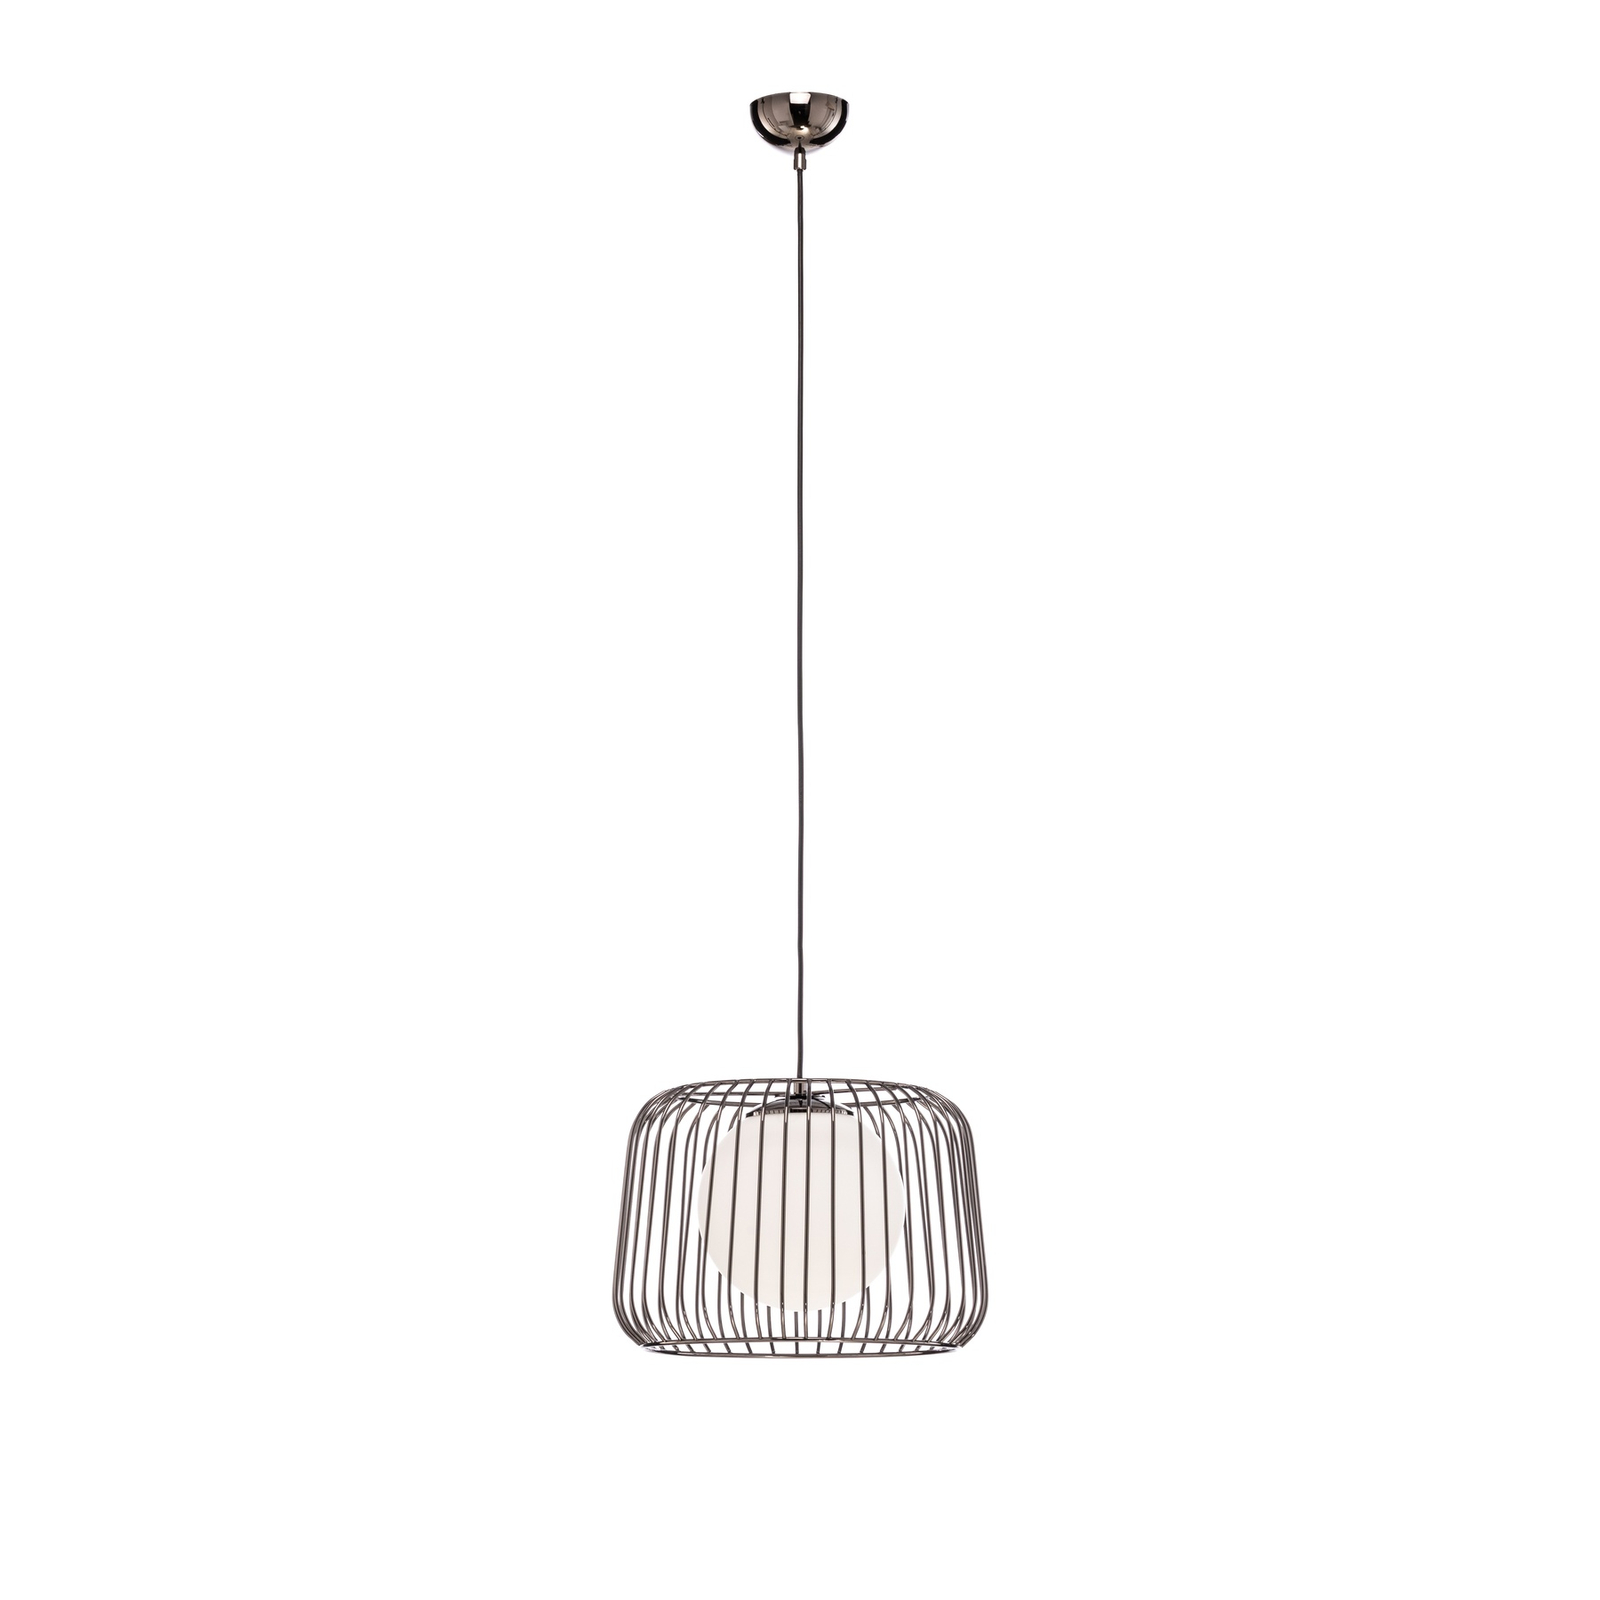 Hanglamp Ladore, Ø 36 cm, zwart-chroom